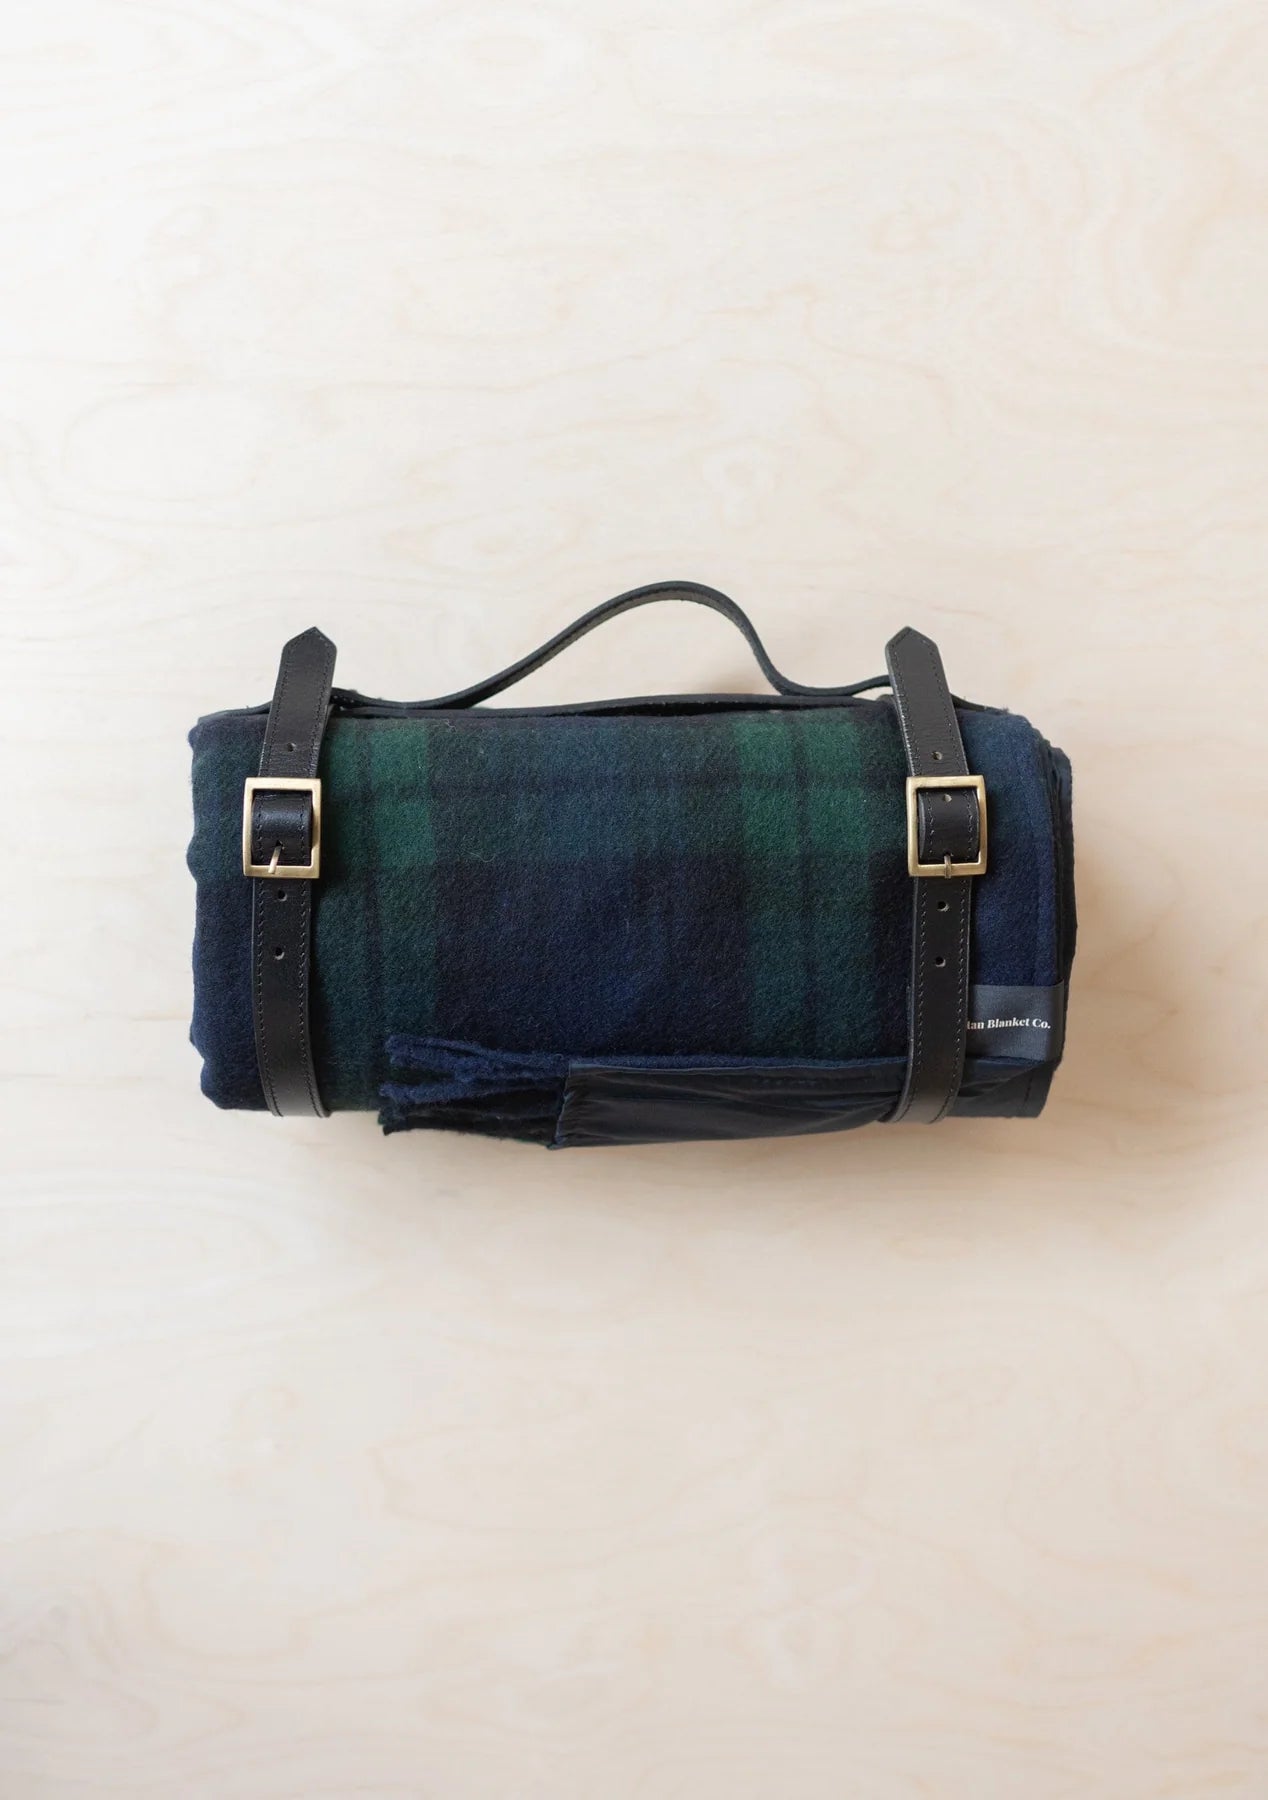 Picnic Blanket in Black Watch Tartan | TBCo | Scottish Creations